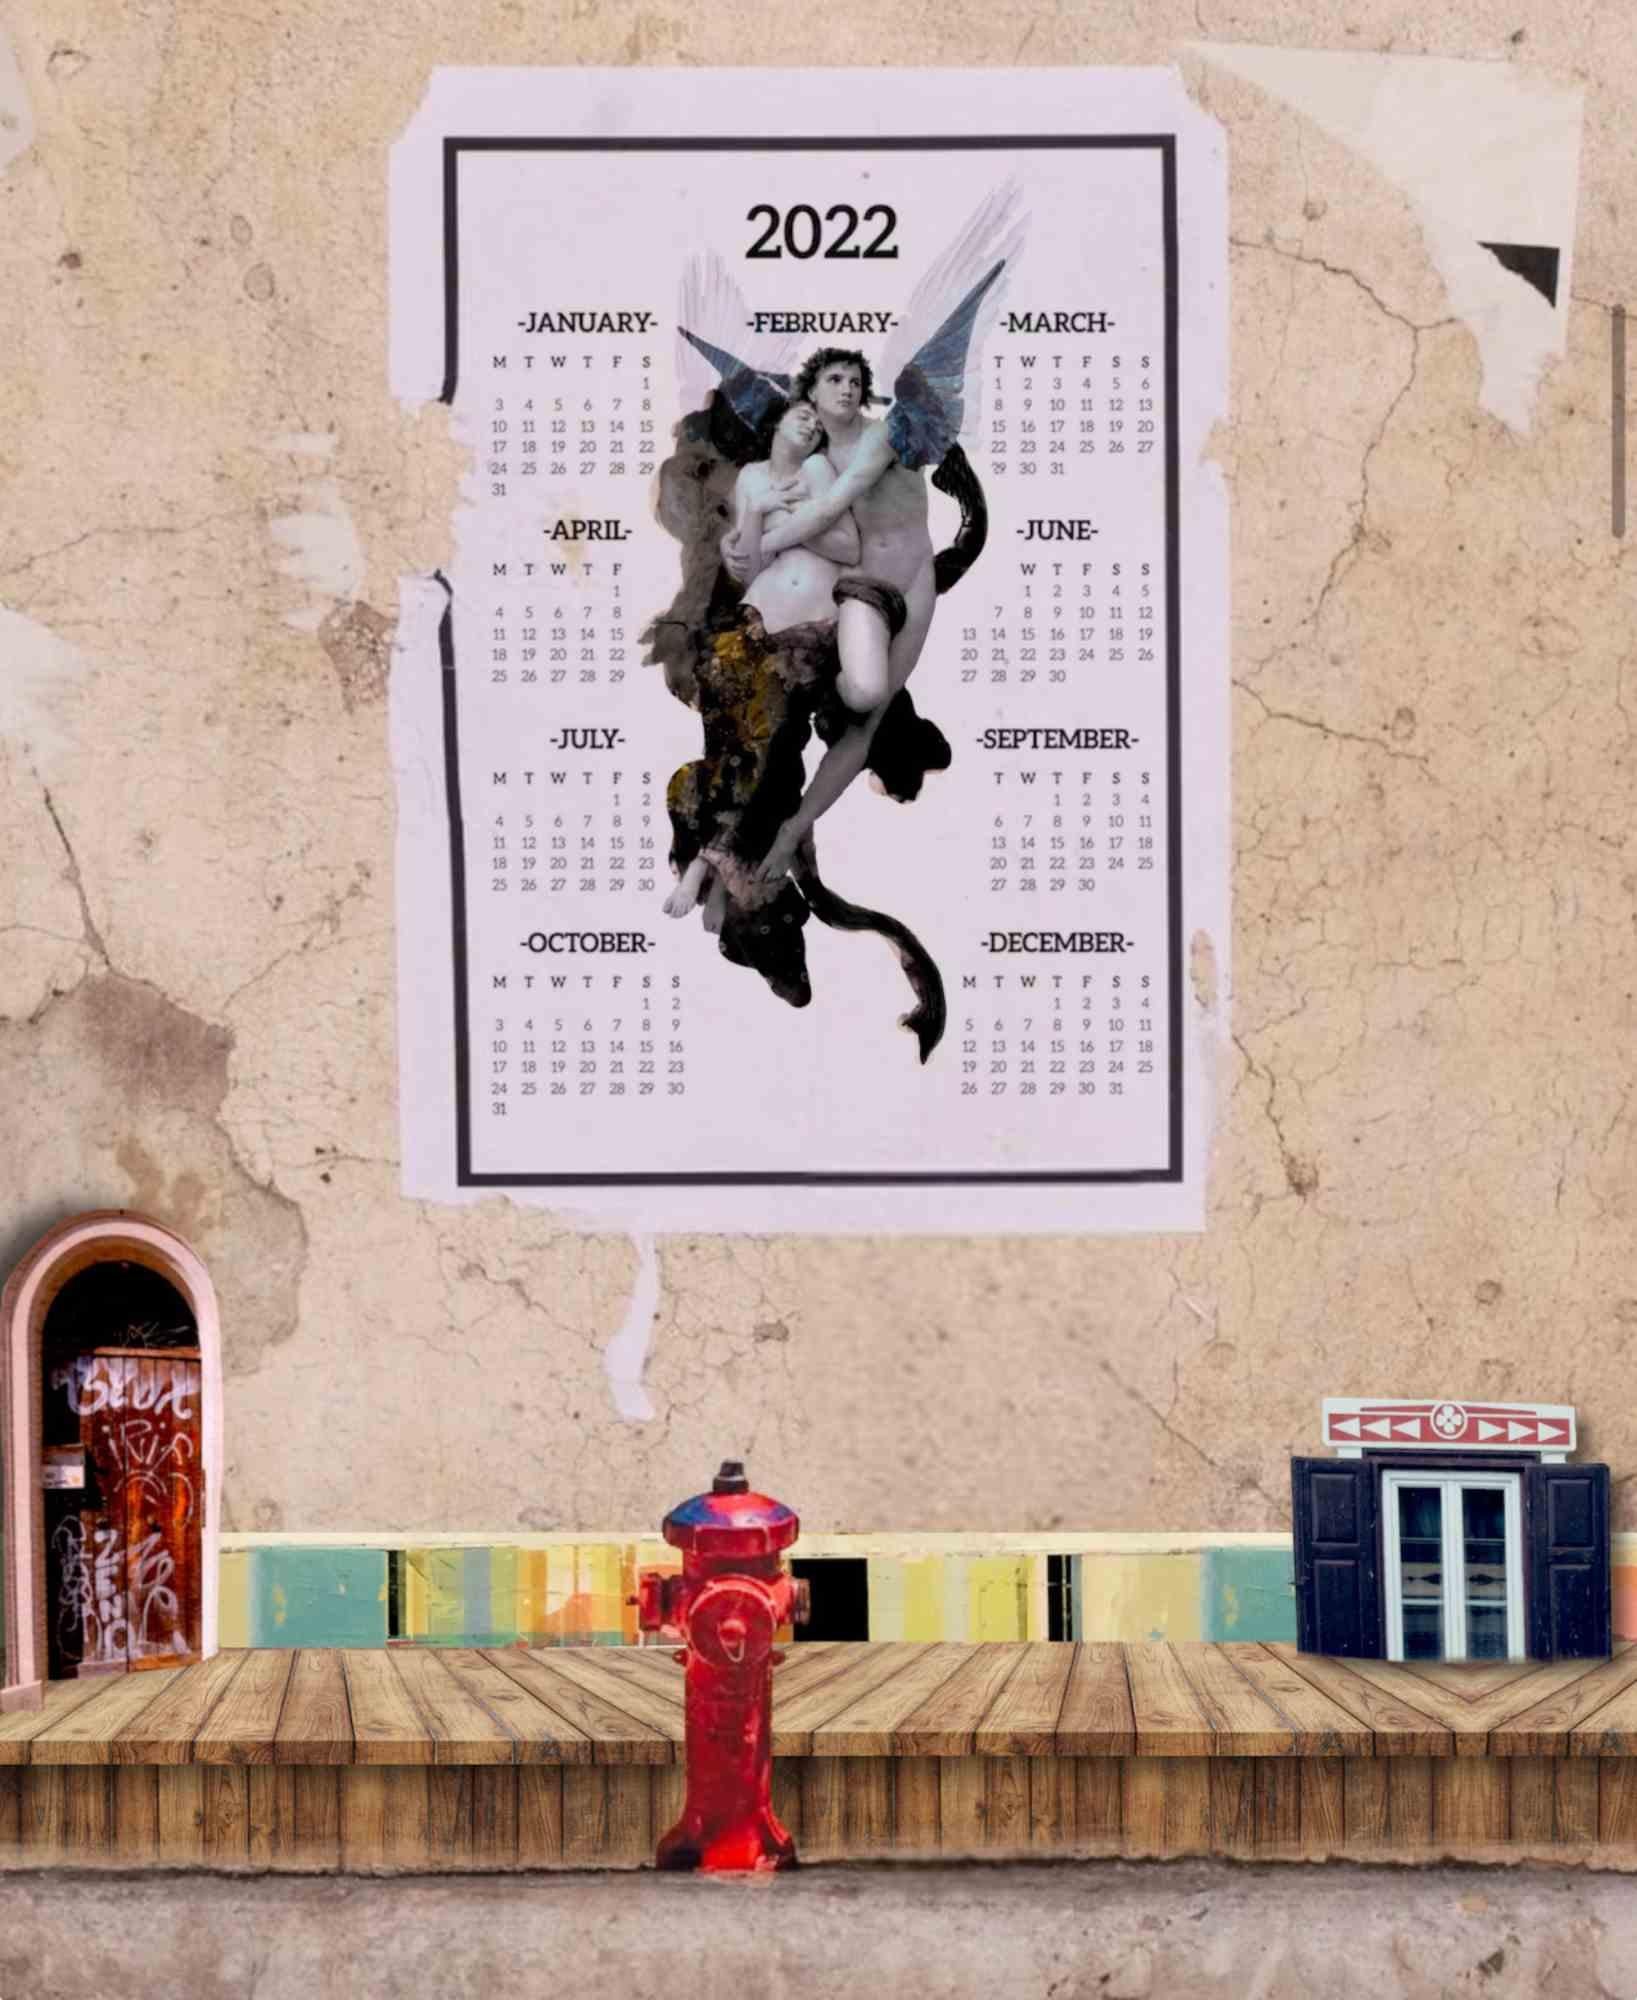 2022 - Digital Collage by Chiara Santoro -2022